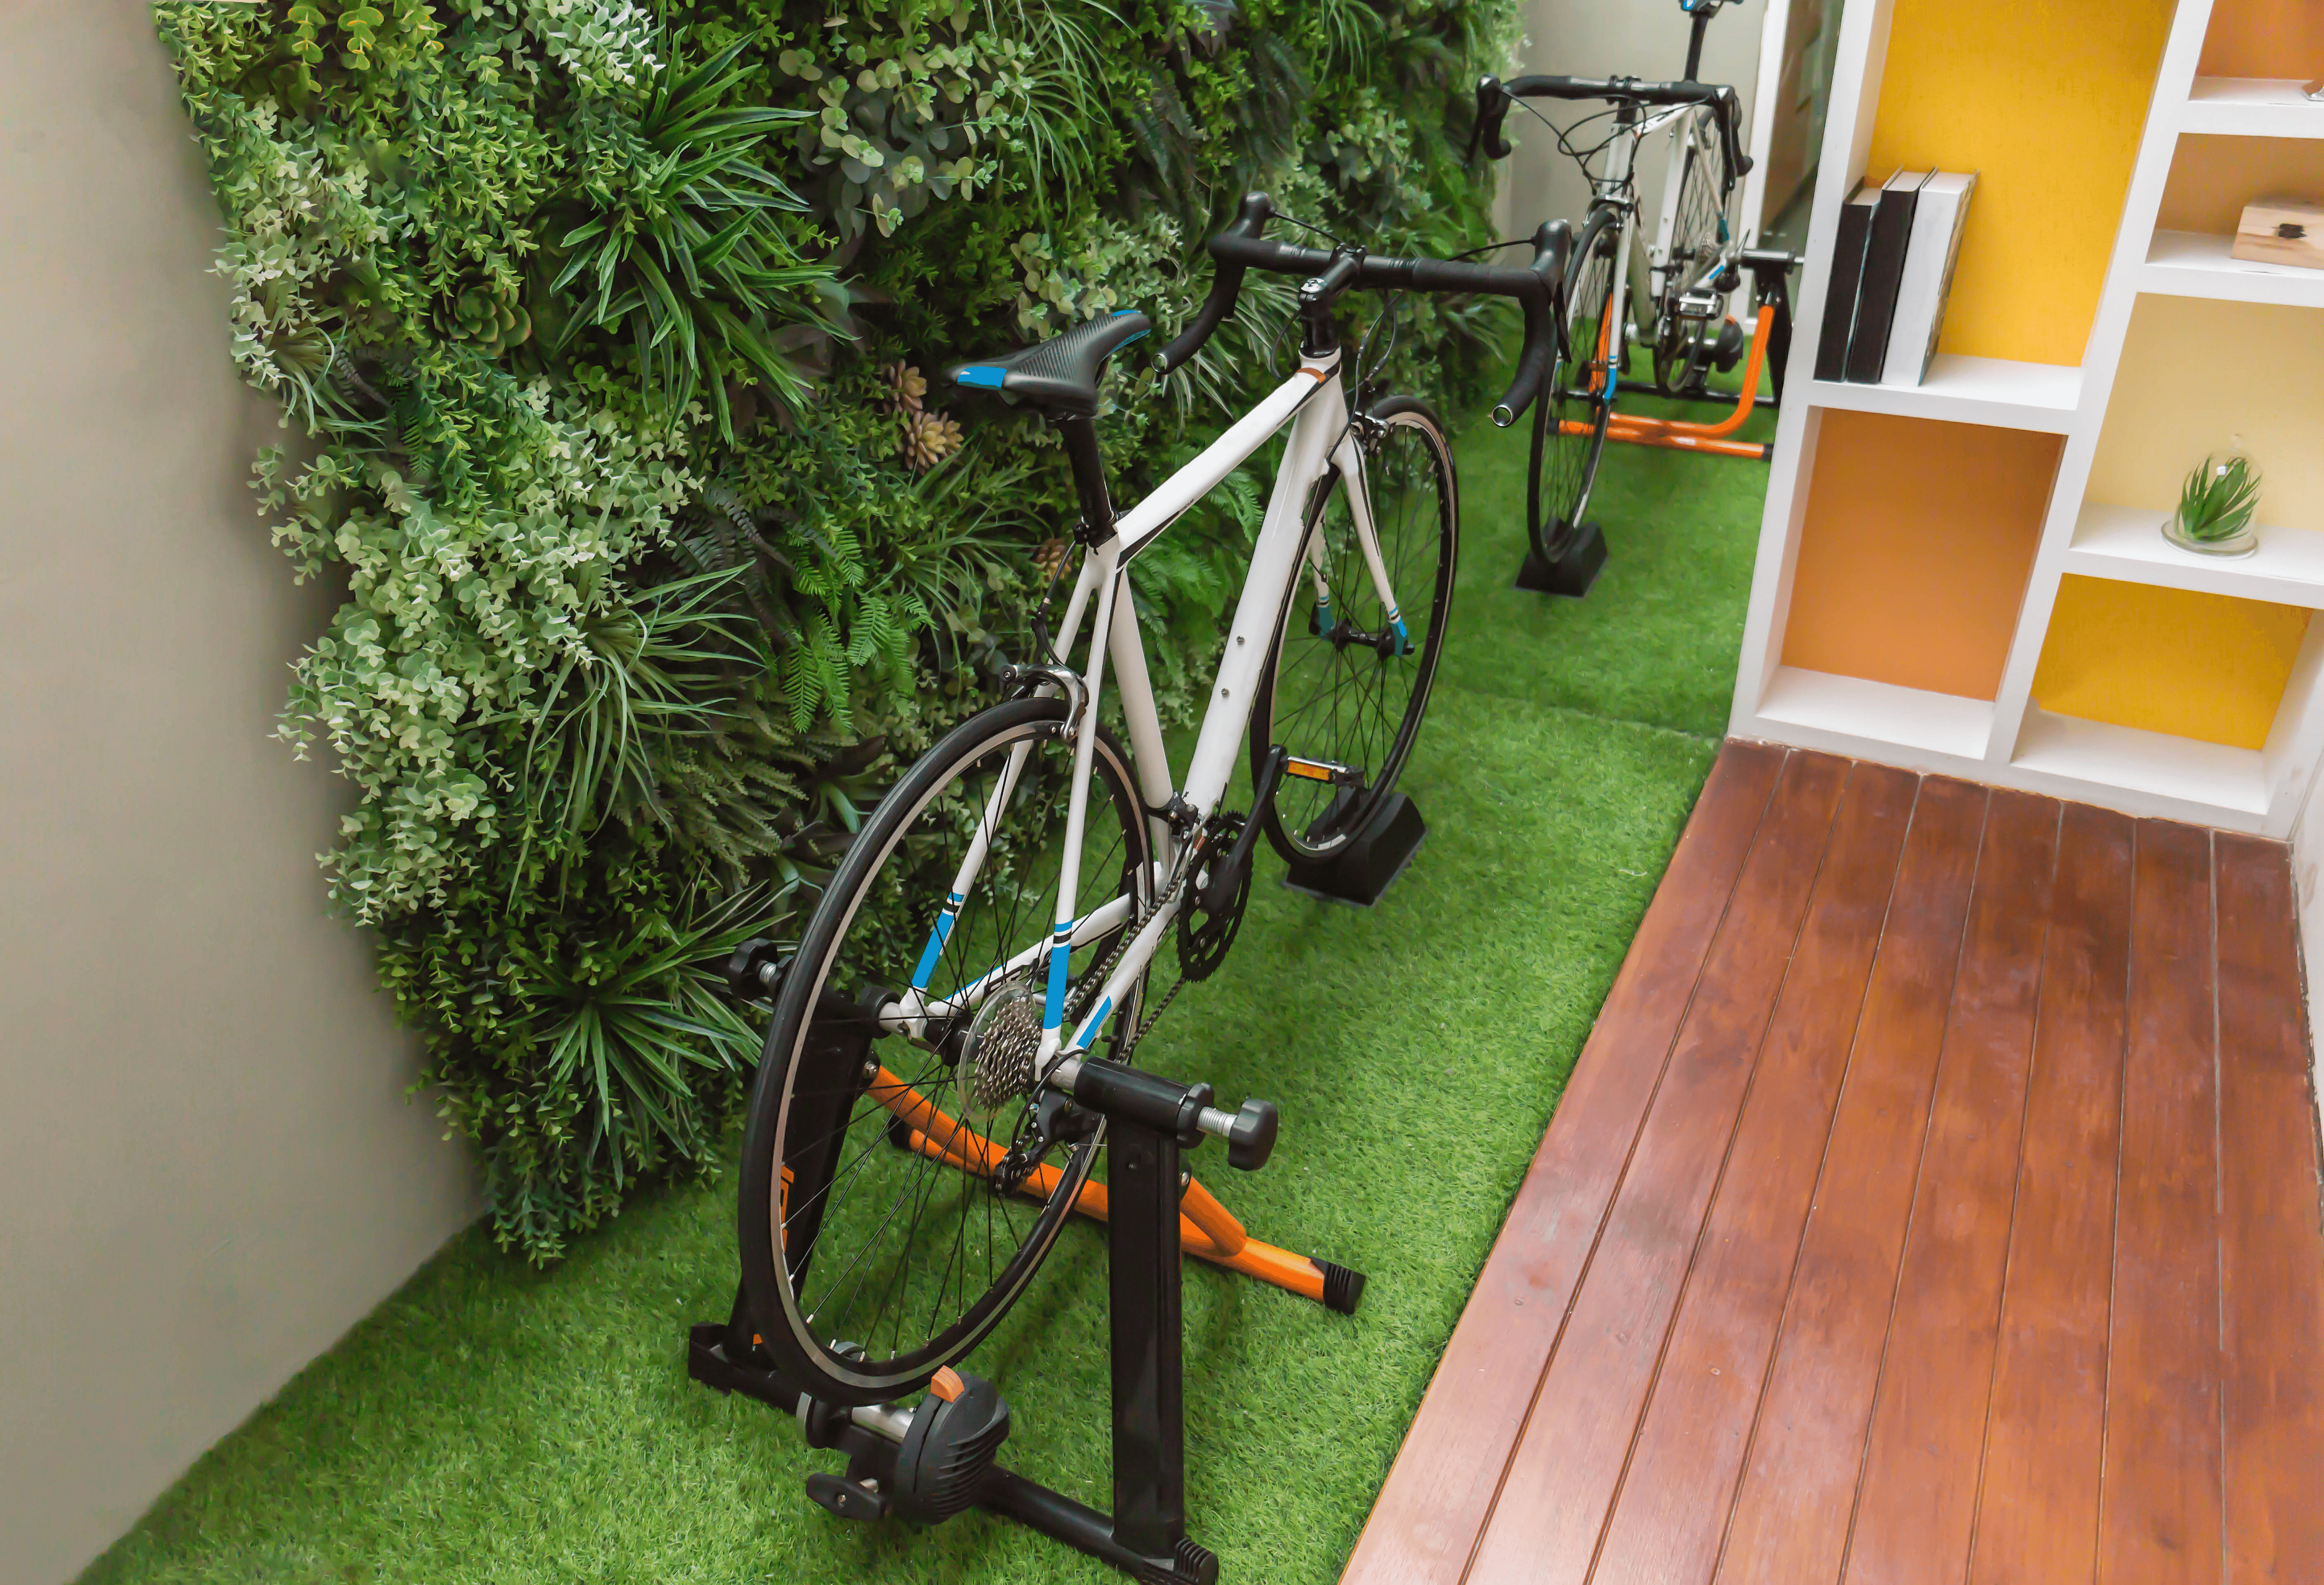 a bike set up on a bike trainer in a garden